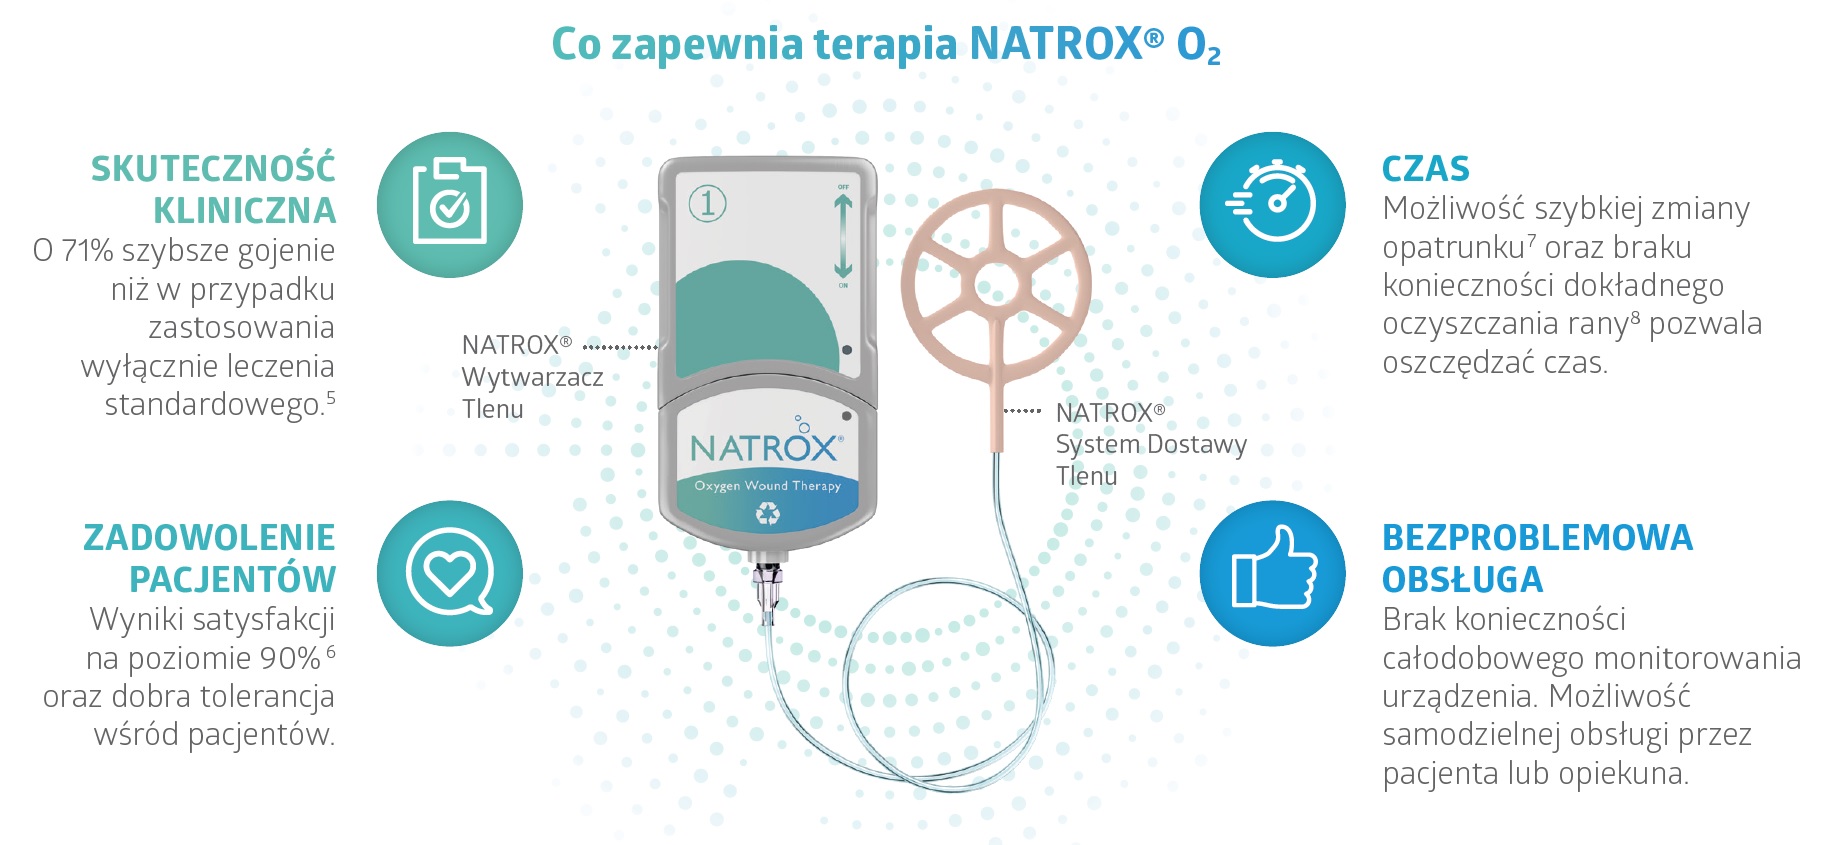 Natrox - tlenoterapia ran